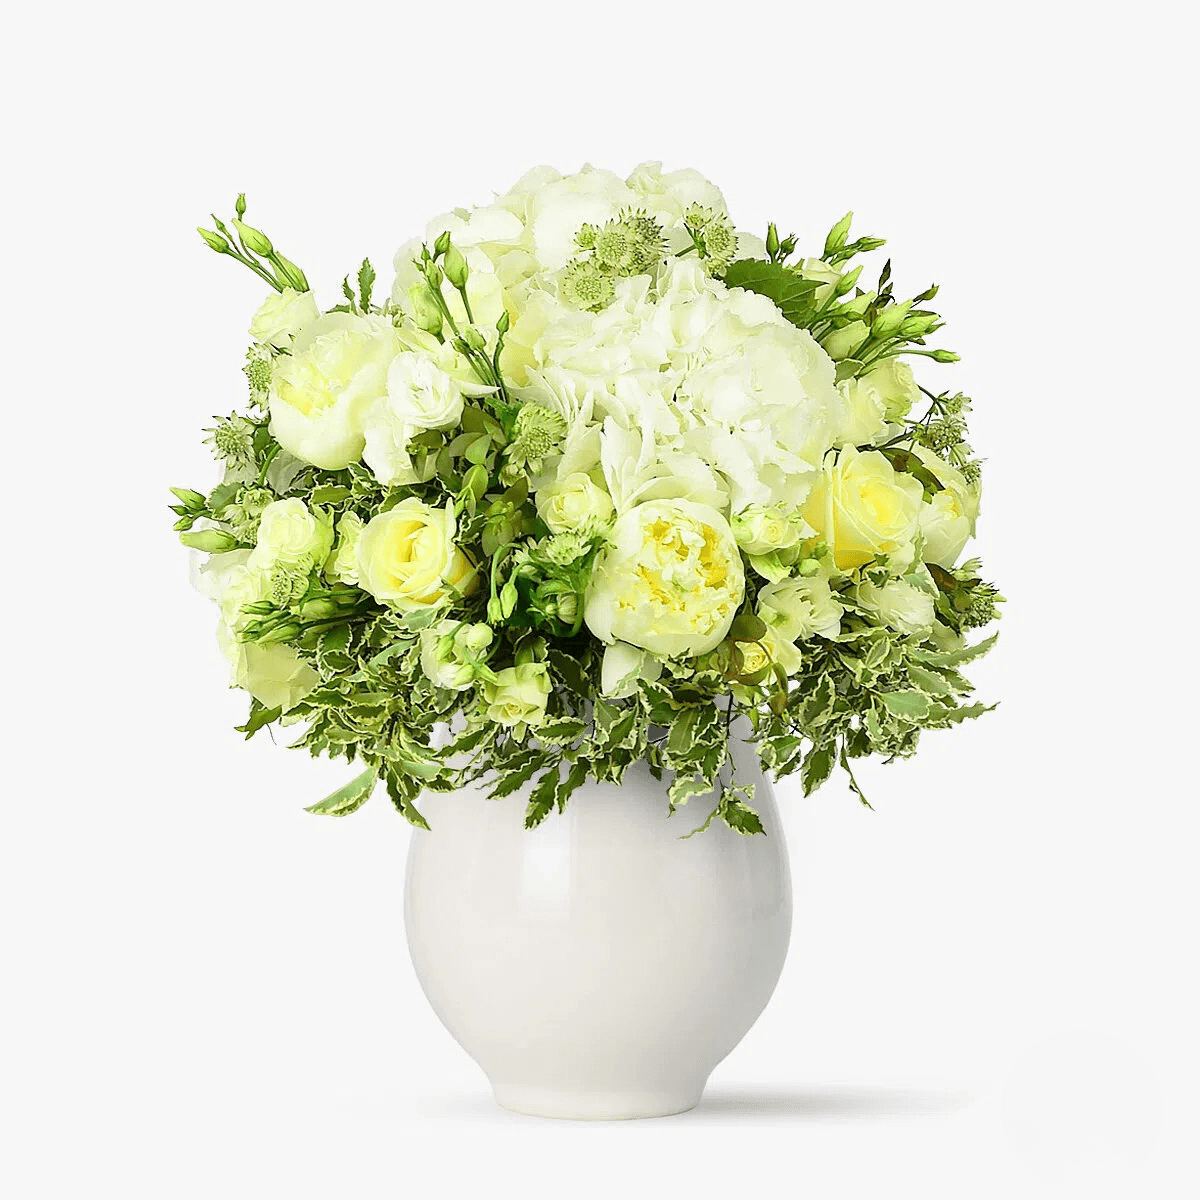 Buchet de flori cu hortensie alba, bujori albi, lisianthus alb, trandafiri crem Buchet vise albe